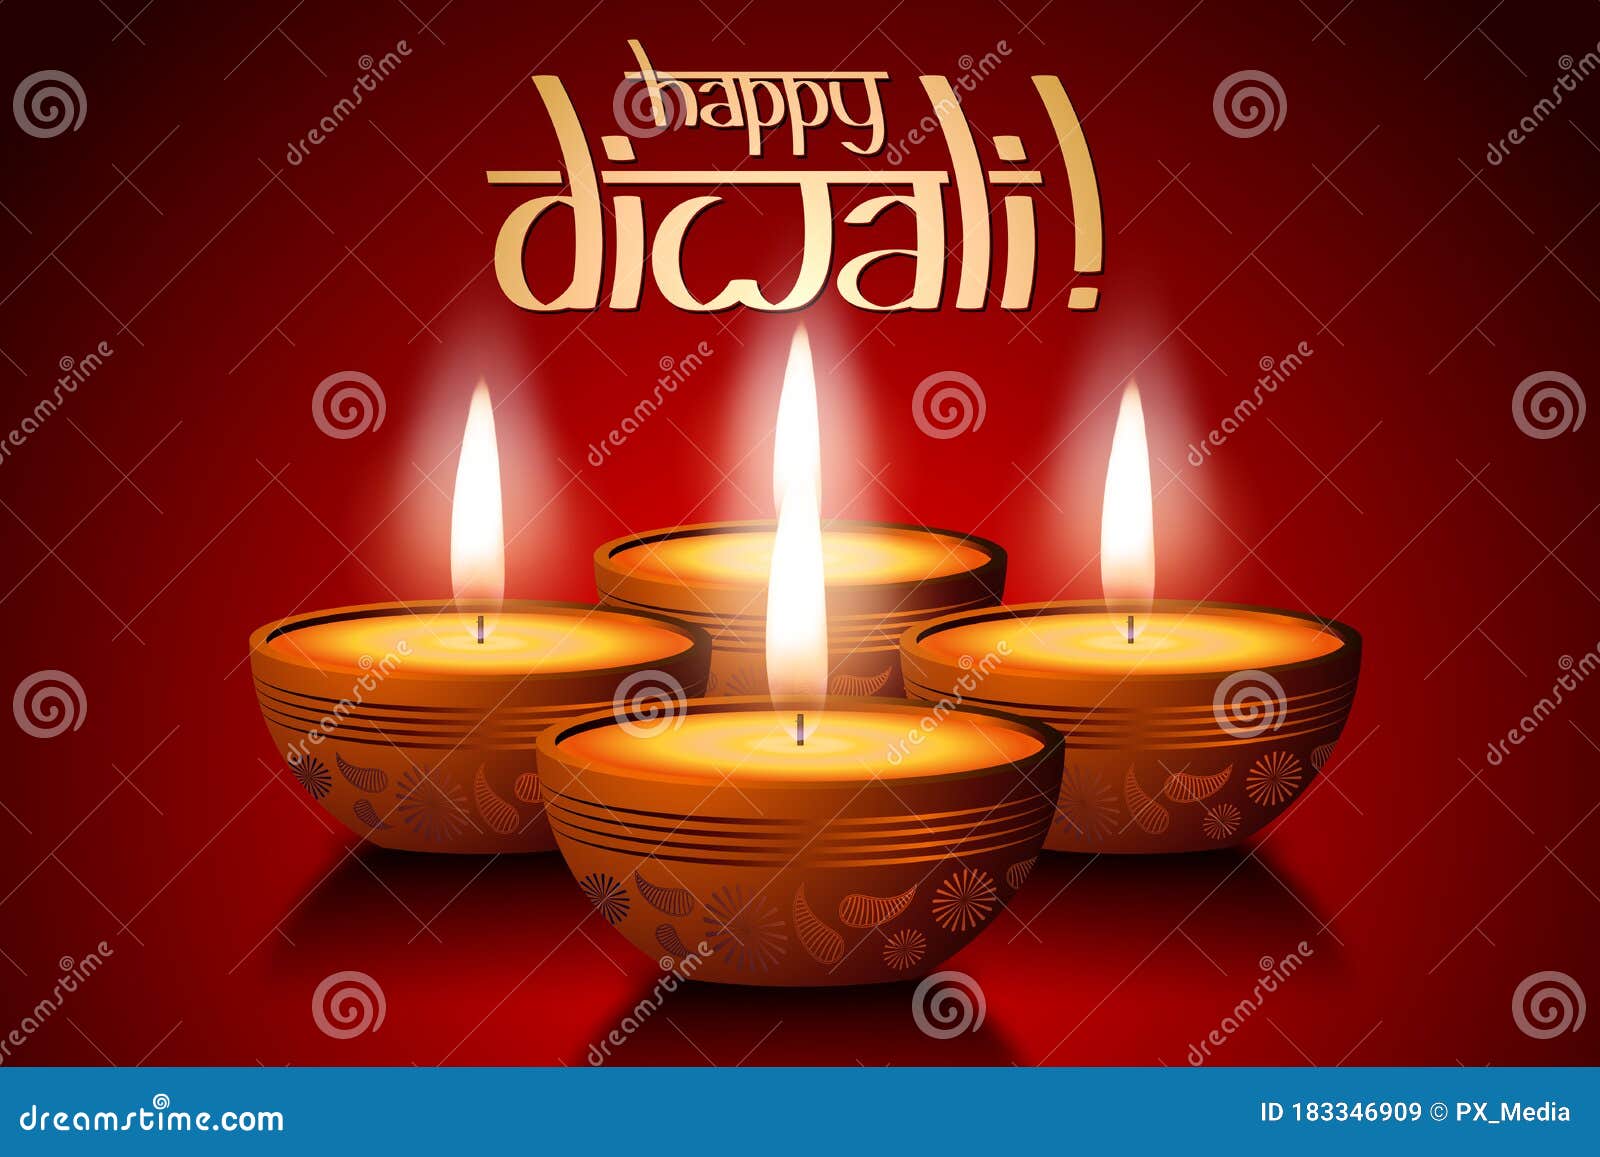 Happy Diwali Card, Four Candles Stock Illustration - Illustration ...